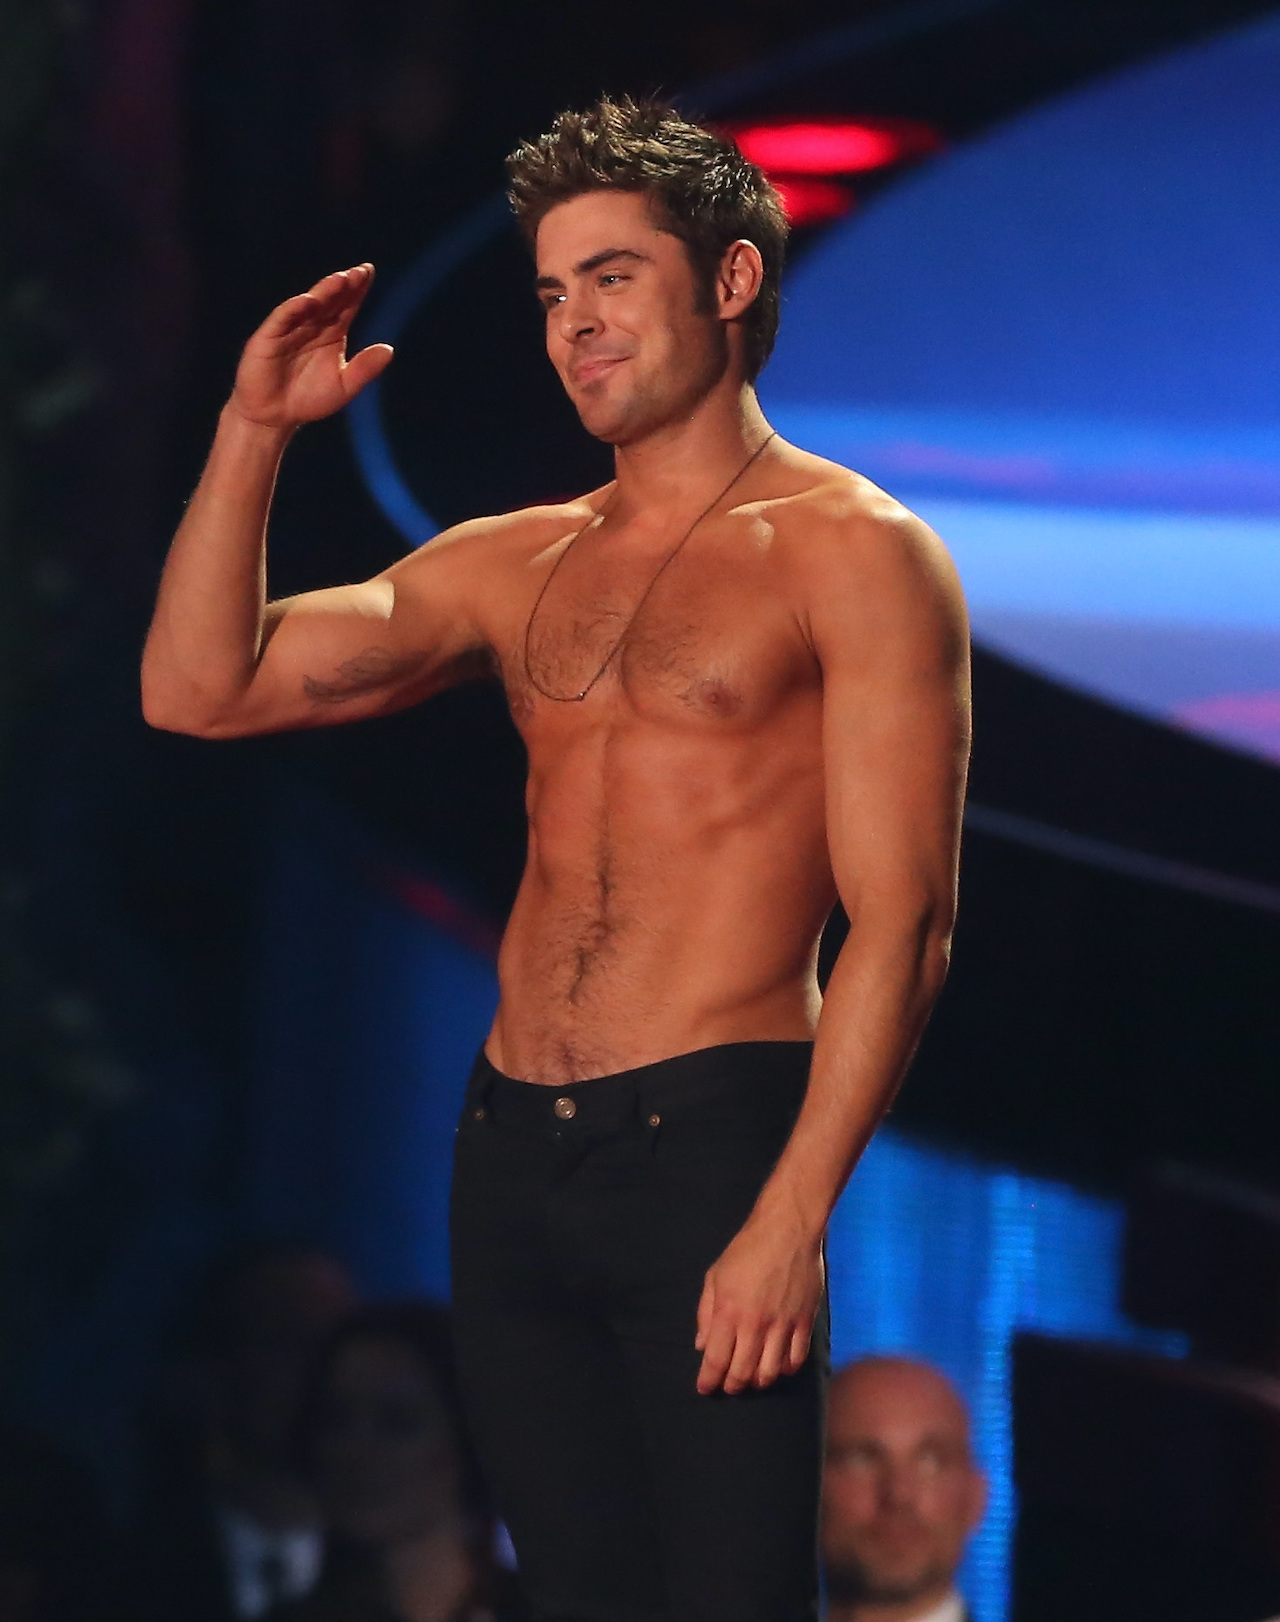 Zac Efron shirtless at the 2014 MTV Movie Awards